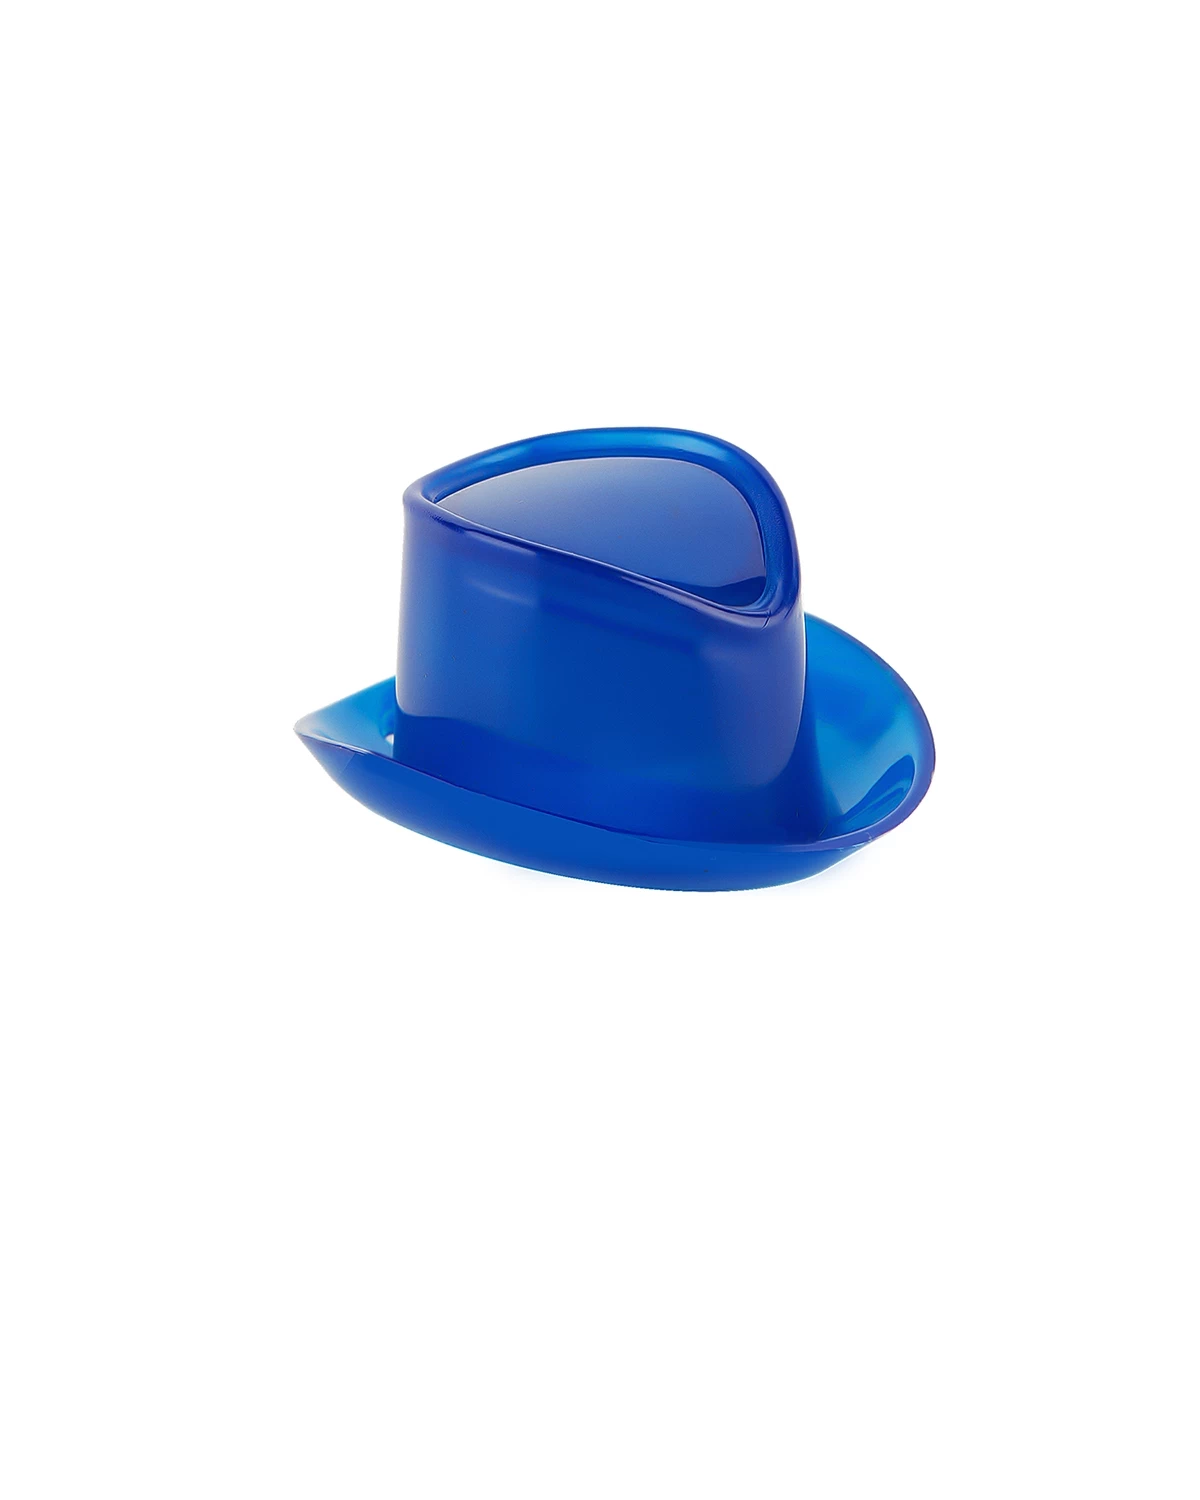 Mavi Şapka Plastik Kapak PETA-2